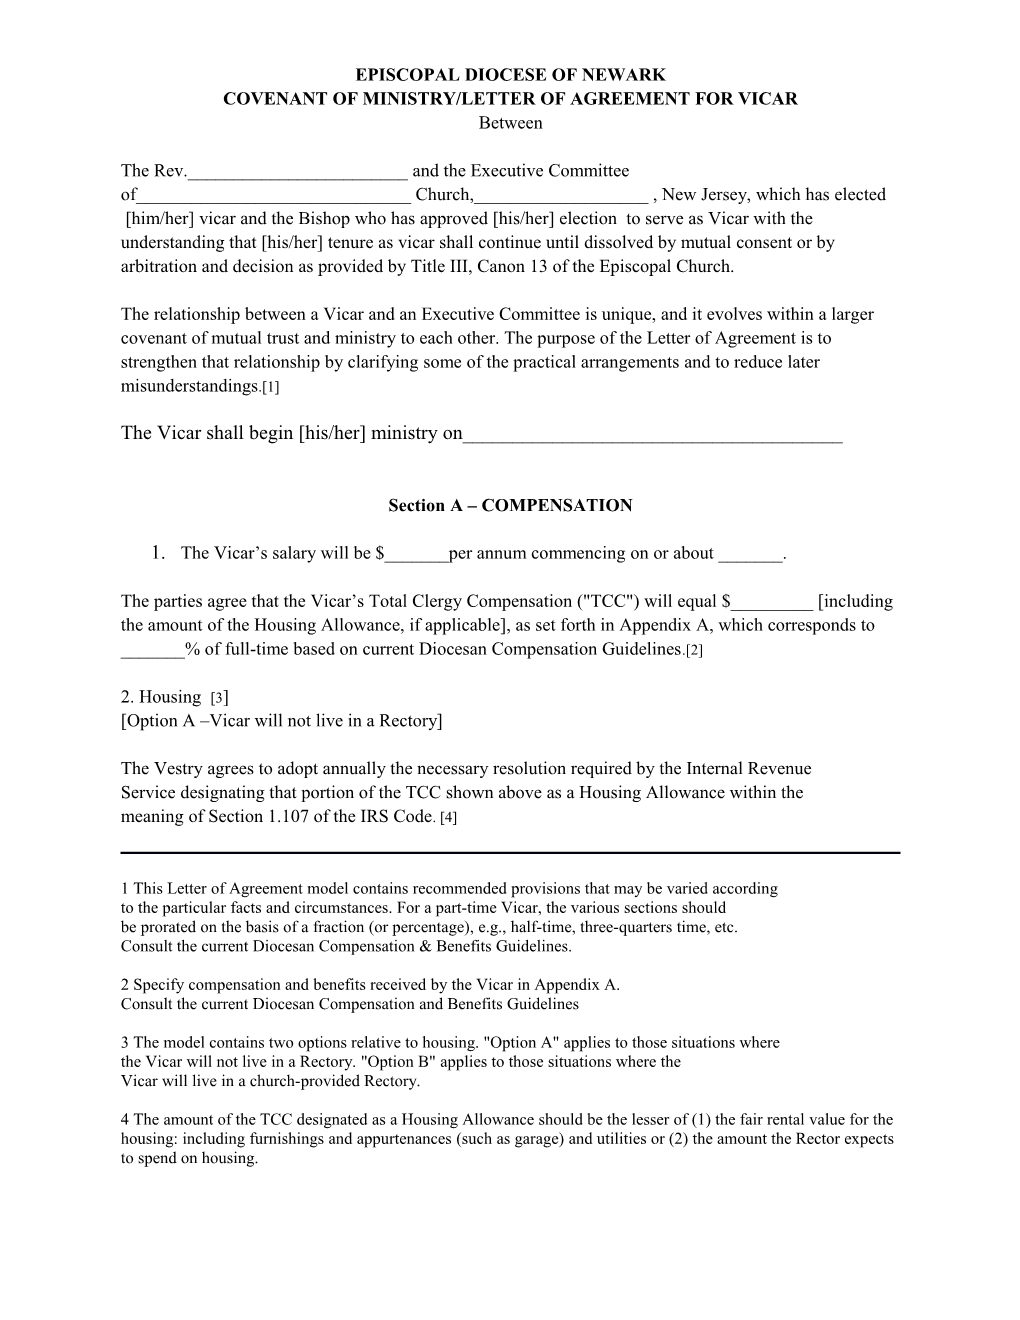 Covenant of Ministry/Letter of Agreement for Vicar